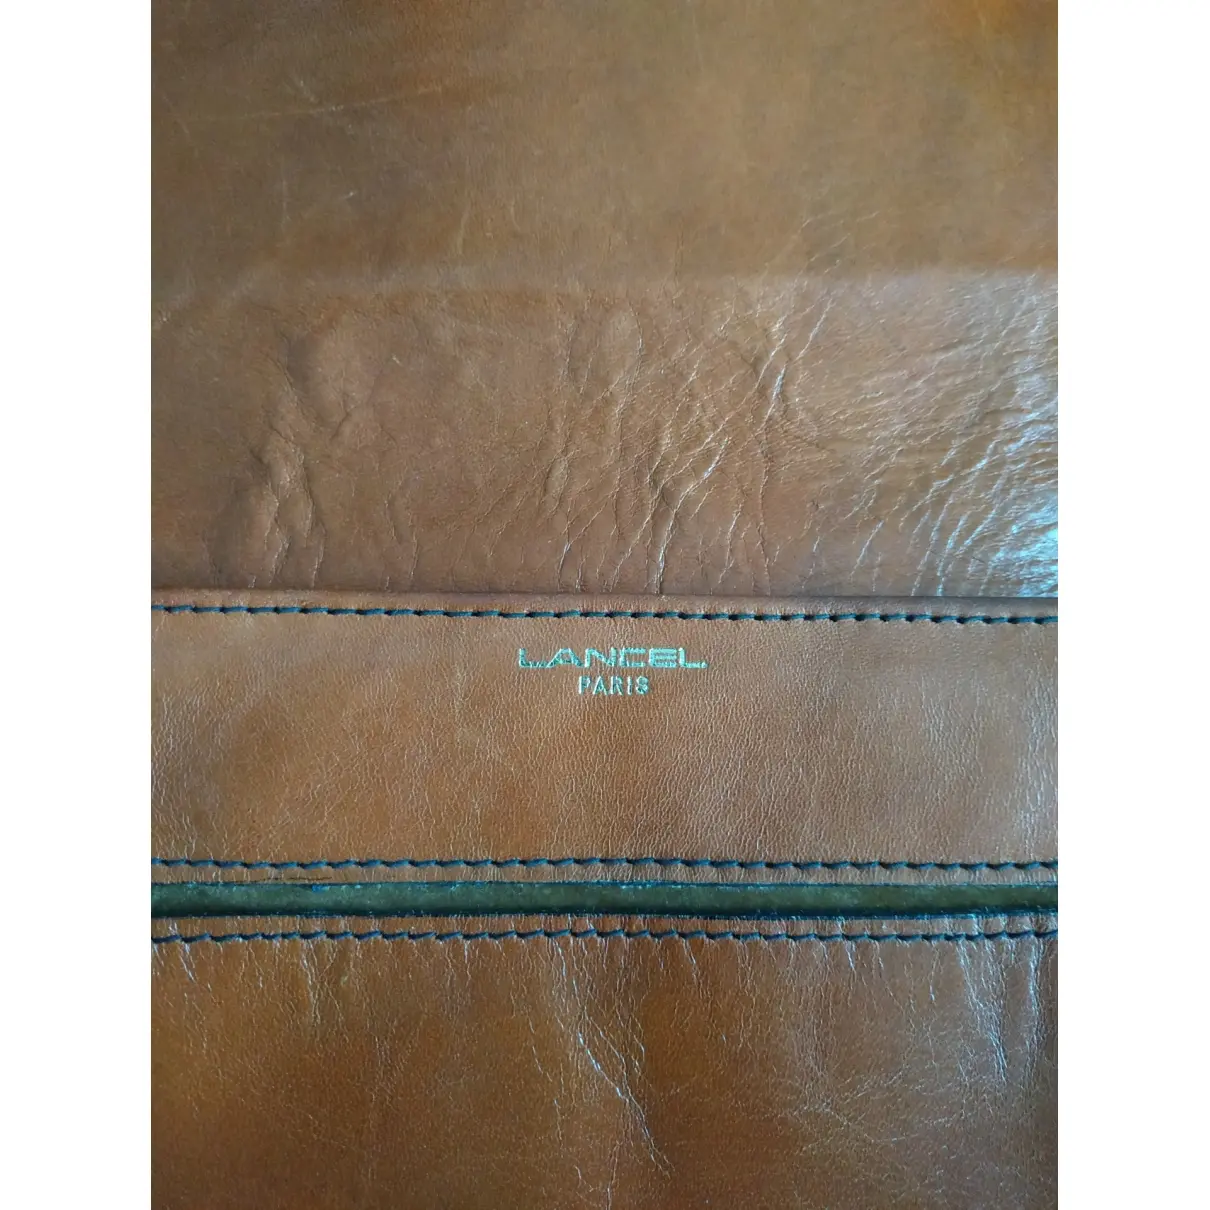 Buy Lancel Leather handbag online